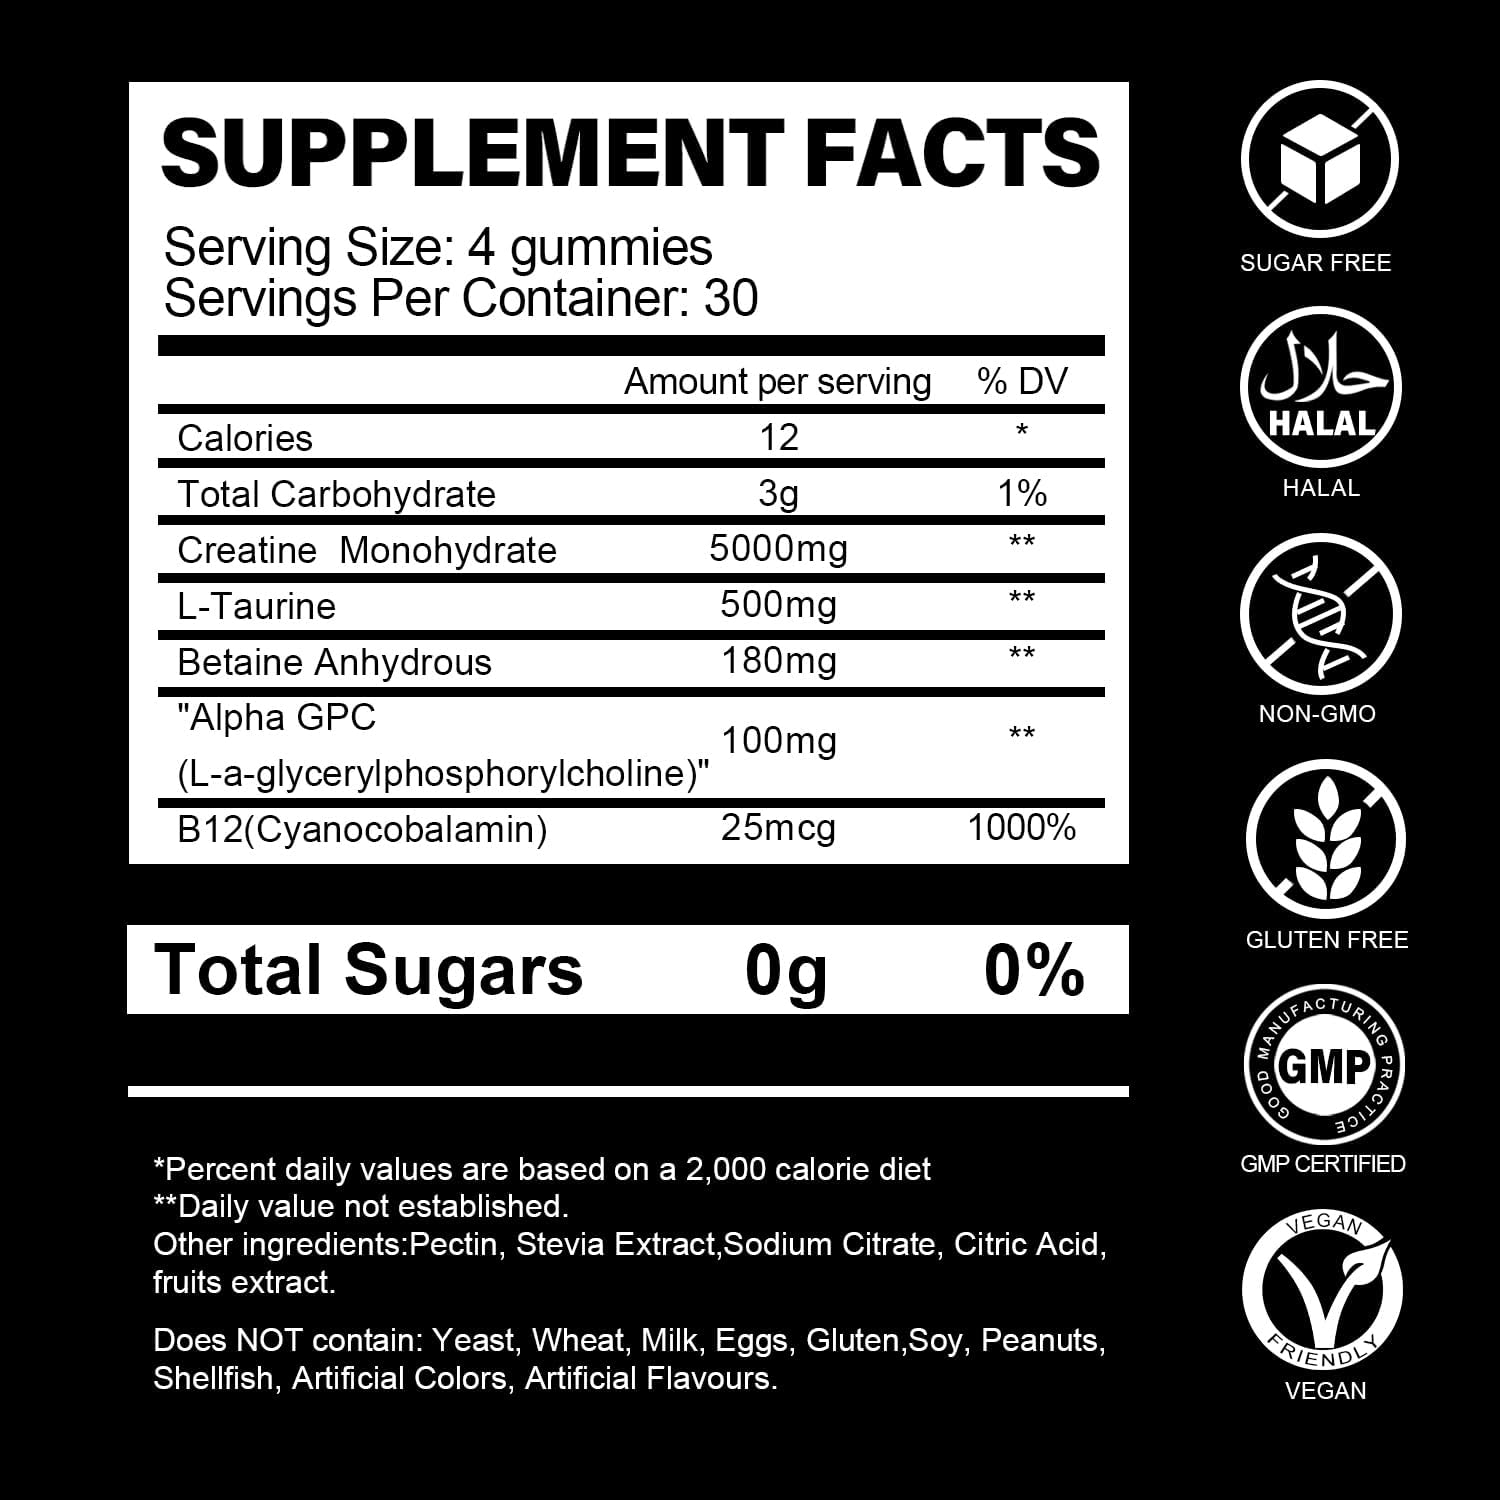 Vidabotan Creatine Monohydrate Gummies | Blueberry Flavor | 5g per serving, 120 count